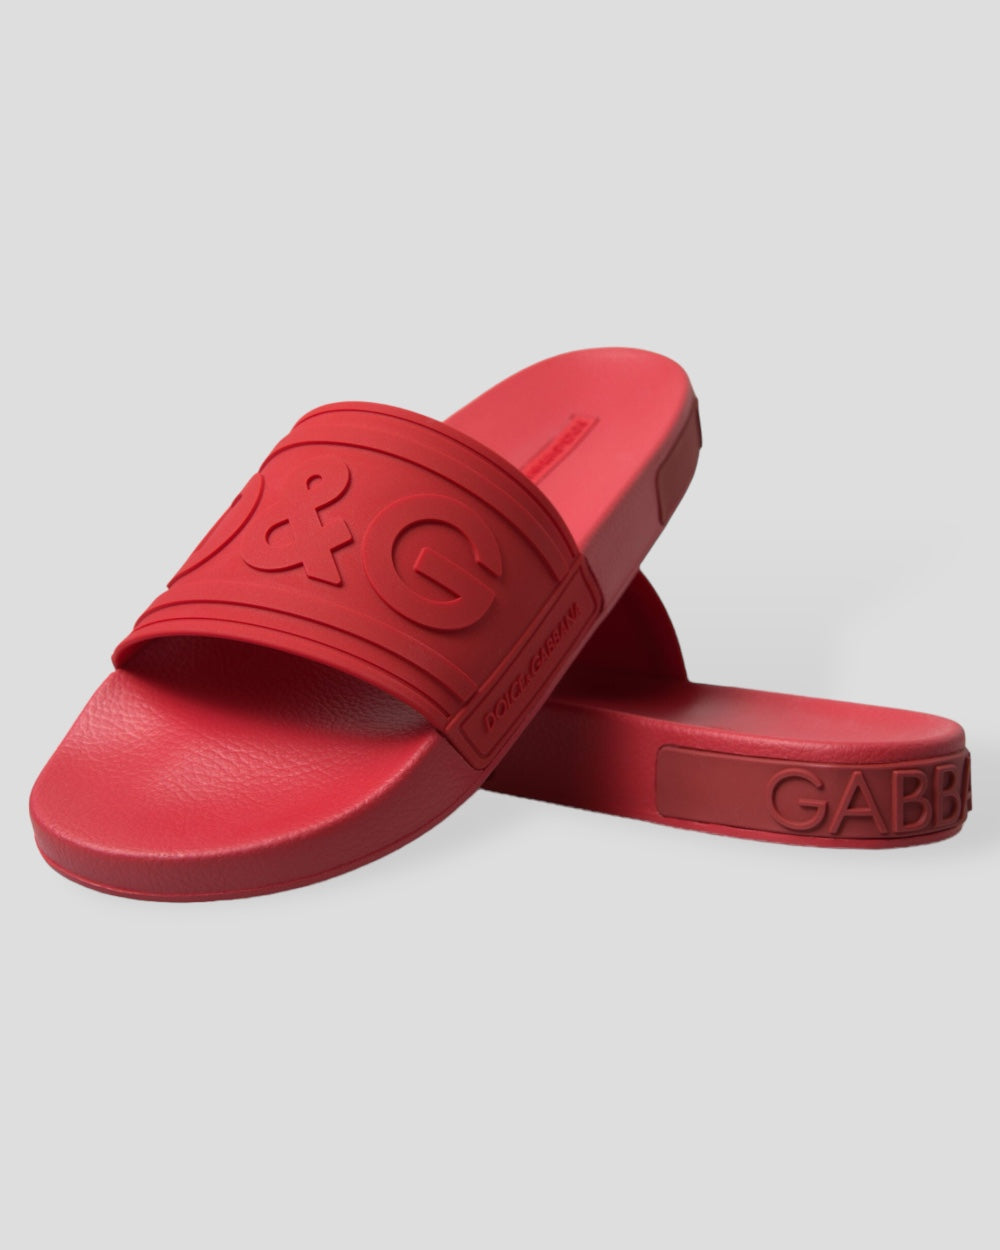 Dolce & Gabbana Red Rubber Summer Beach Slides Sandals